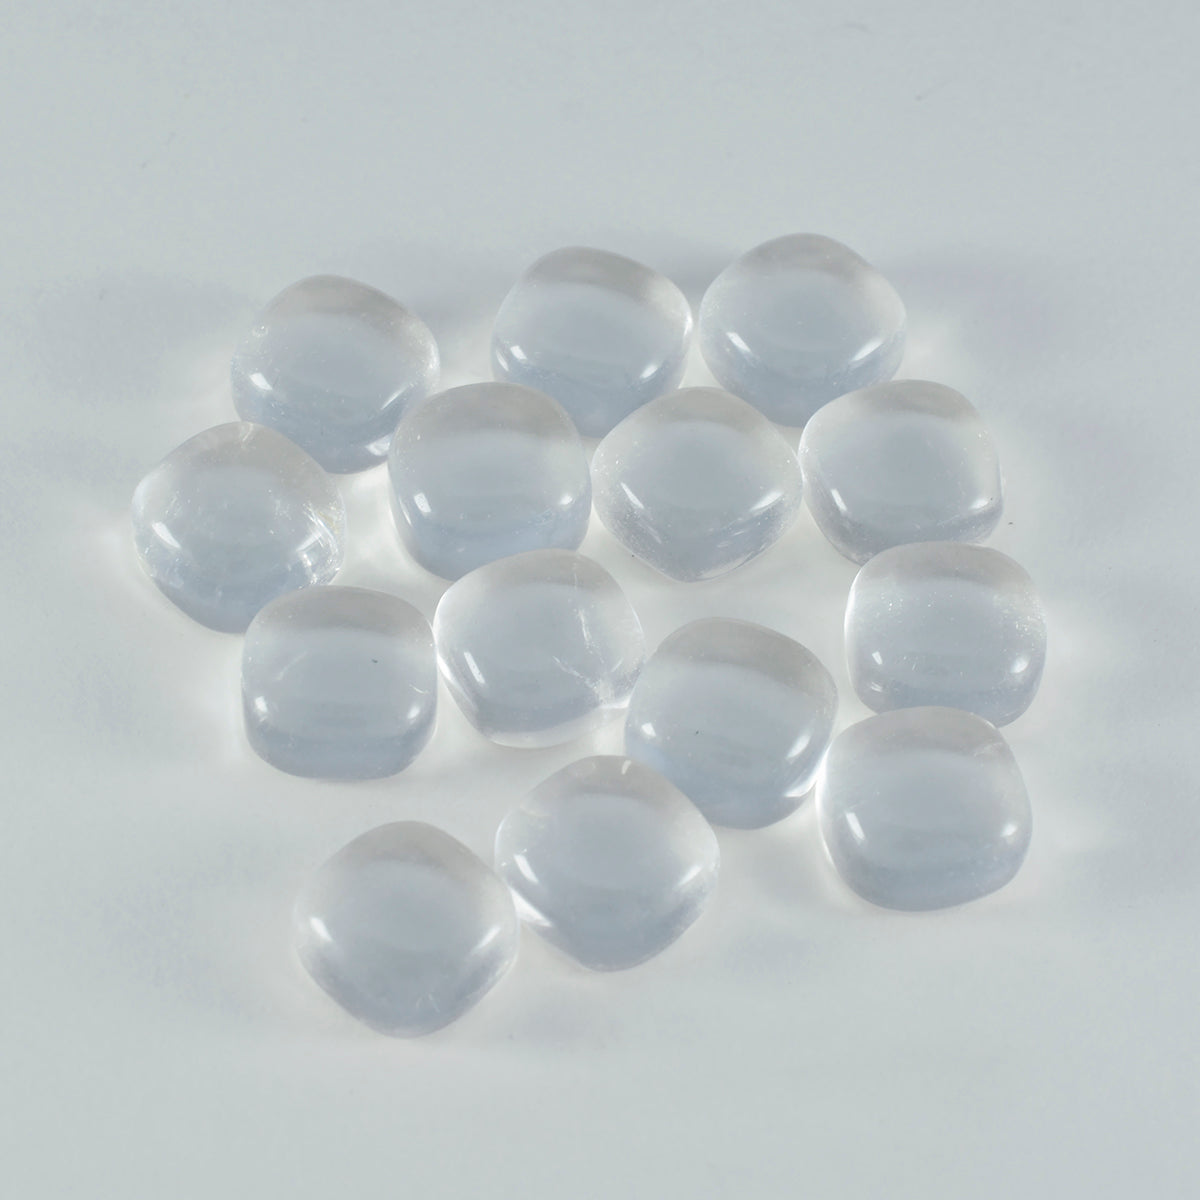 Riyogems 1PC White Crystal Quartz Cabochon 6x6 mm Cushion Shape attractive Quality Gemstone